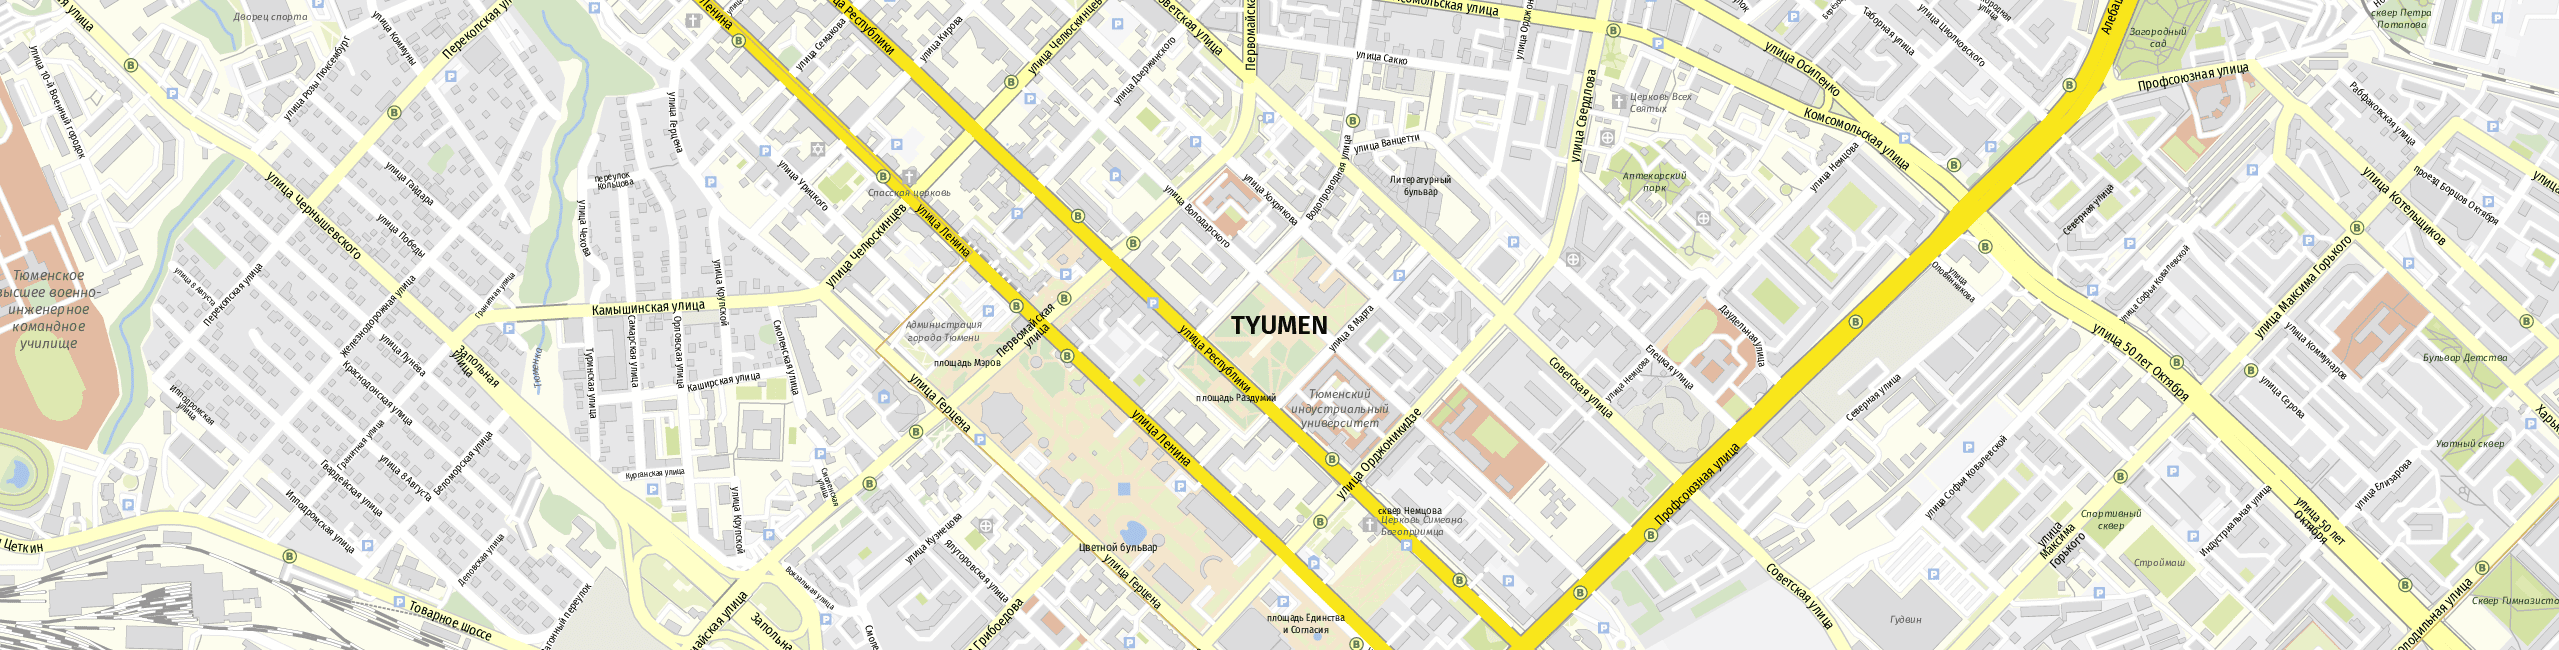 Stadtplan Tyumen zum Downloaden.